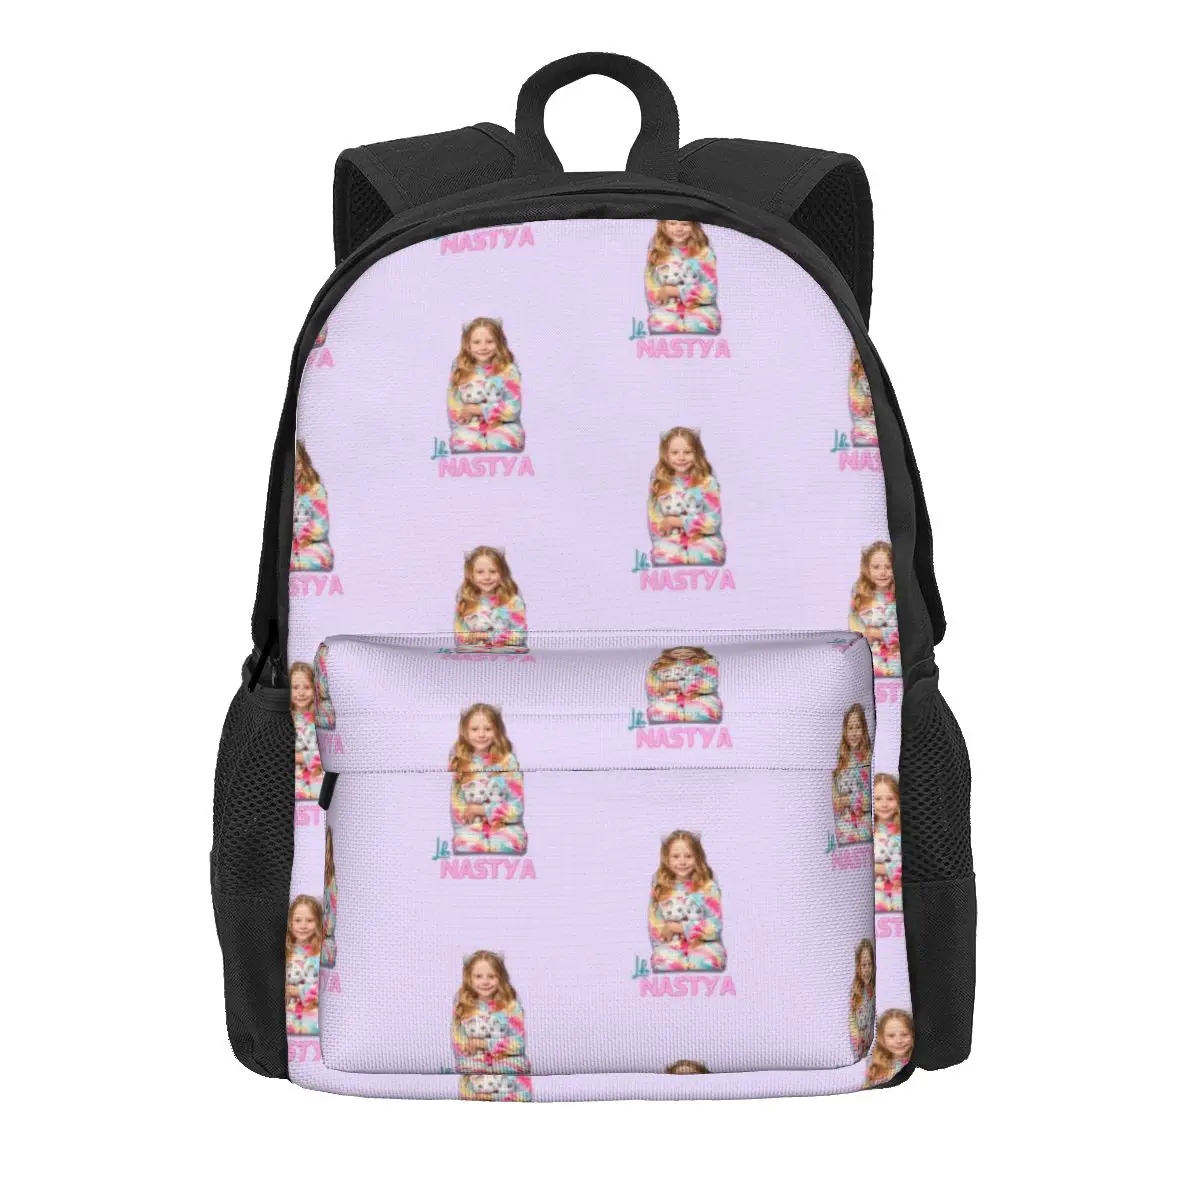 

Funny Like Nastya Women Backpack Casual Student School Bag Child Gift Laptop Rucksack Teenage Waterproof Rucksack